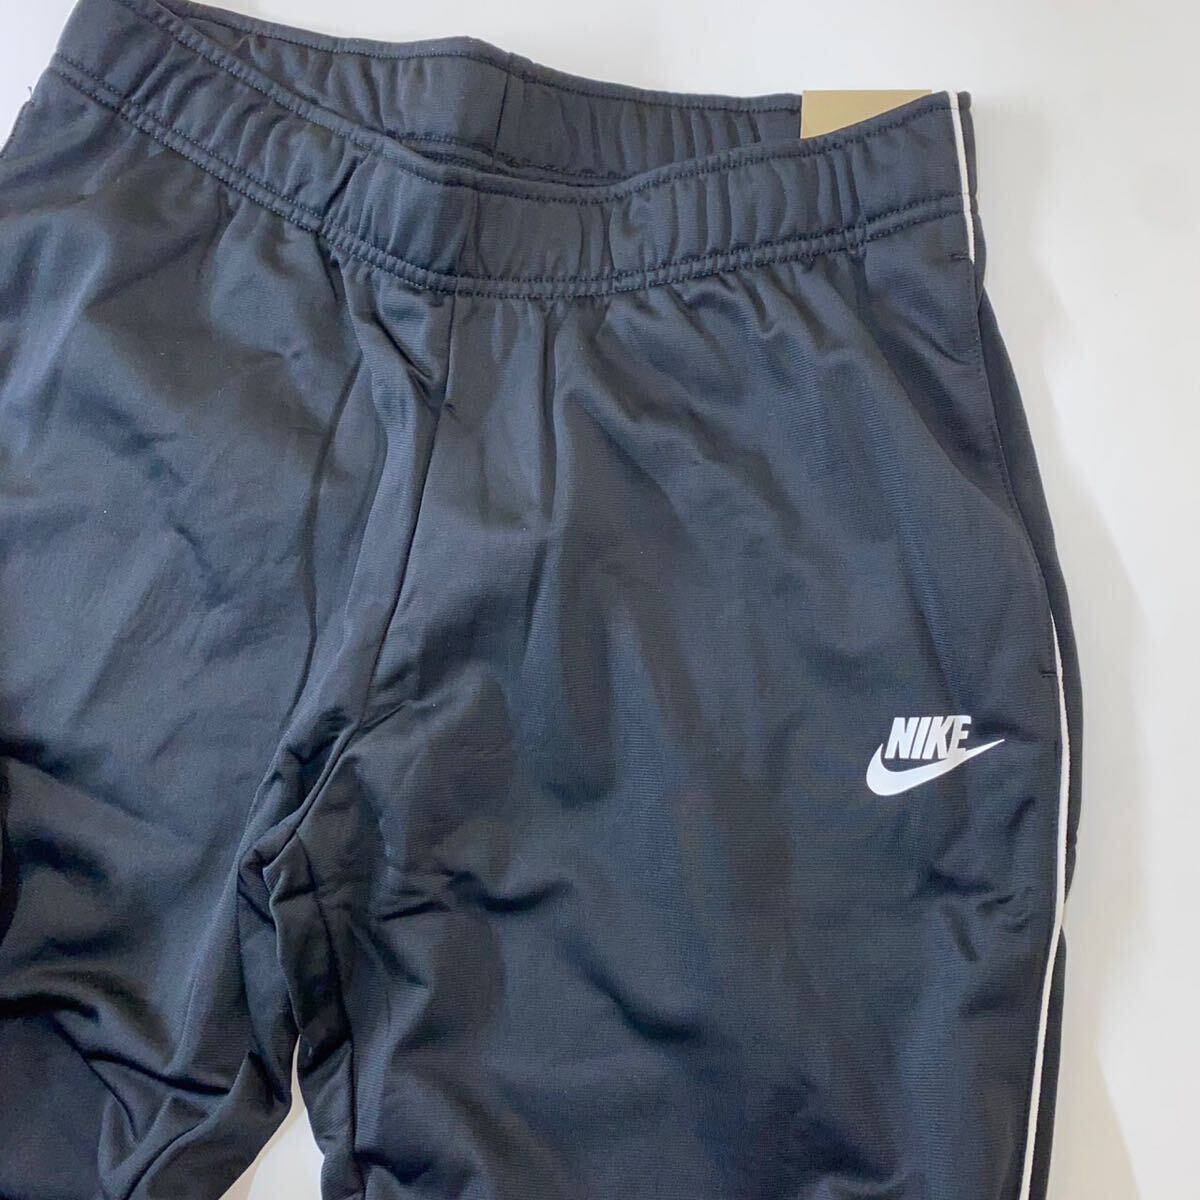  Nike wear wi men's fitedoto Lux -tsu lady's dd5861-011 top and bottom set size L